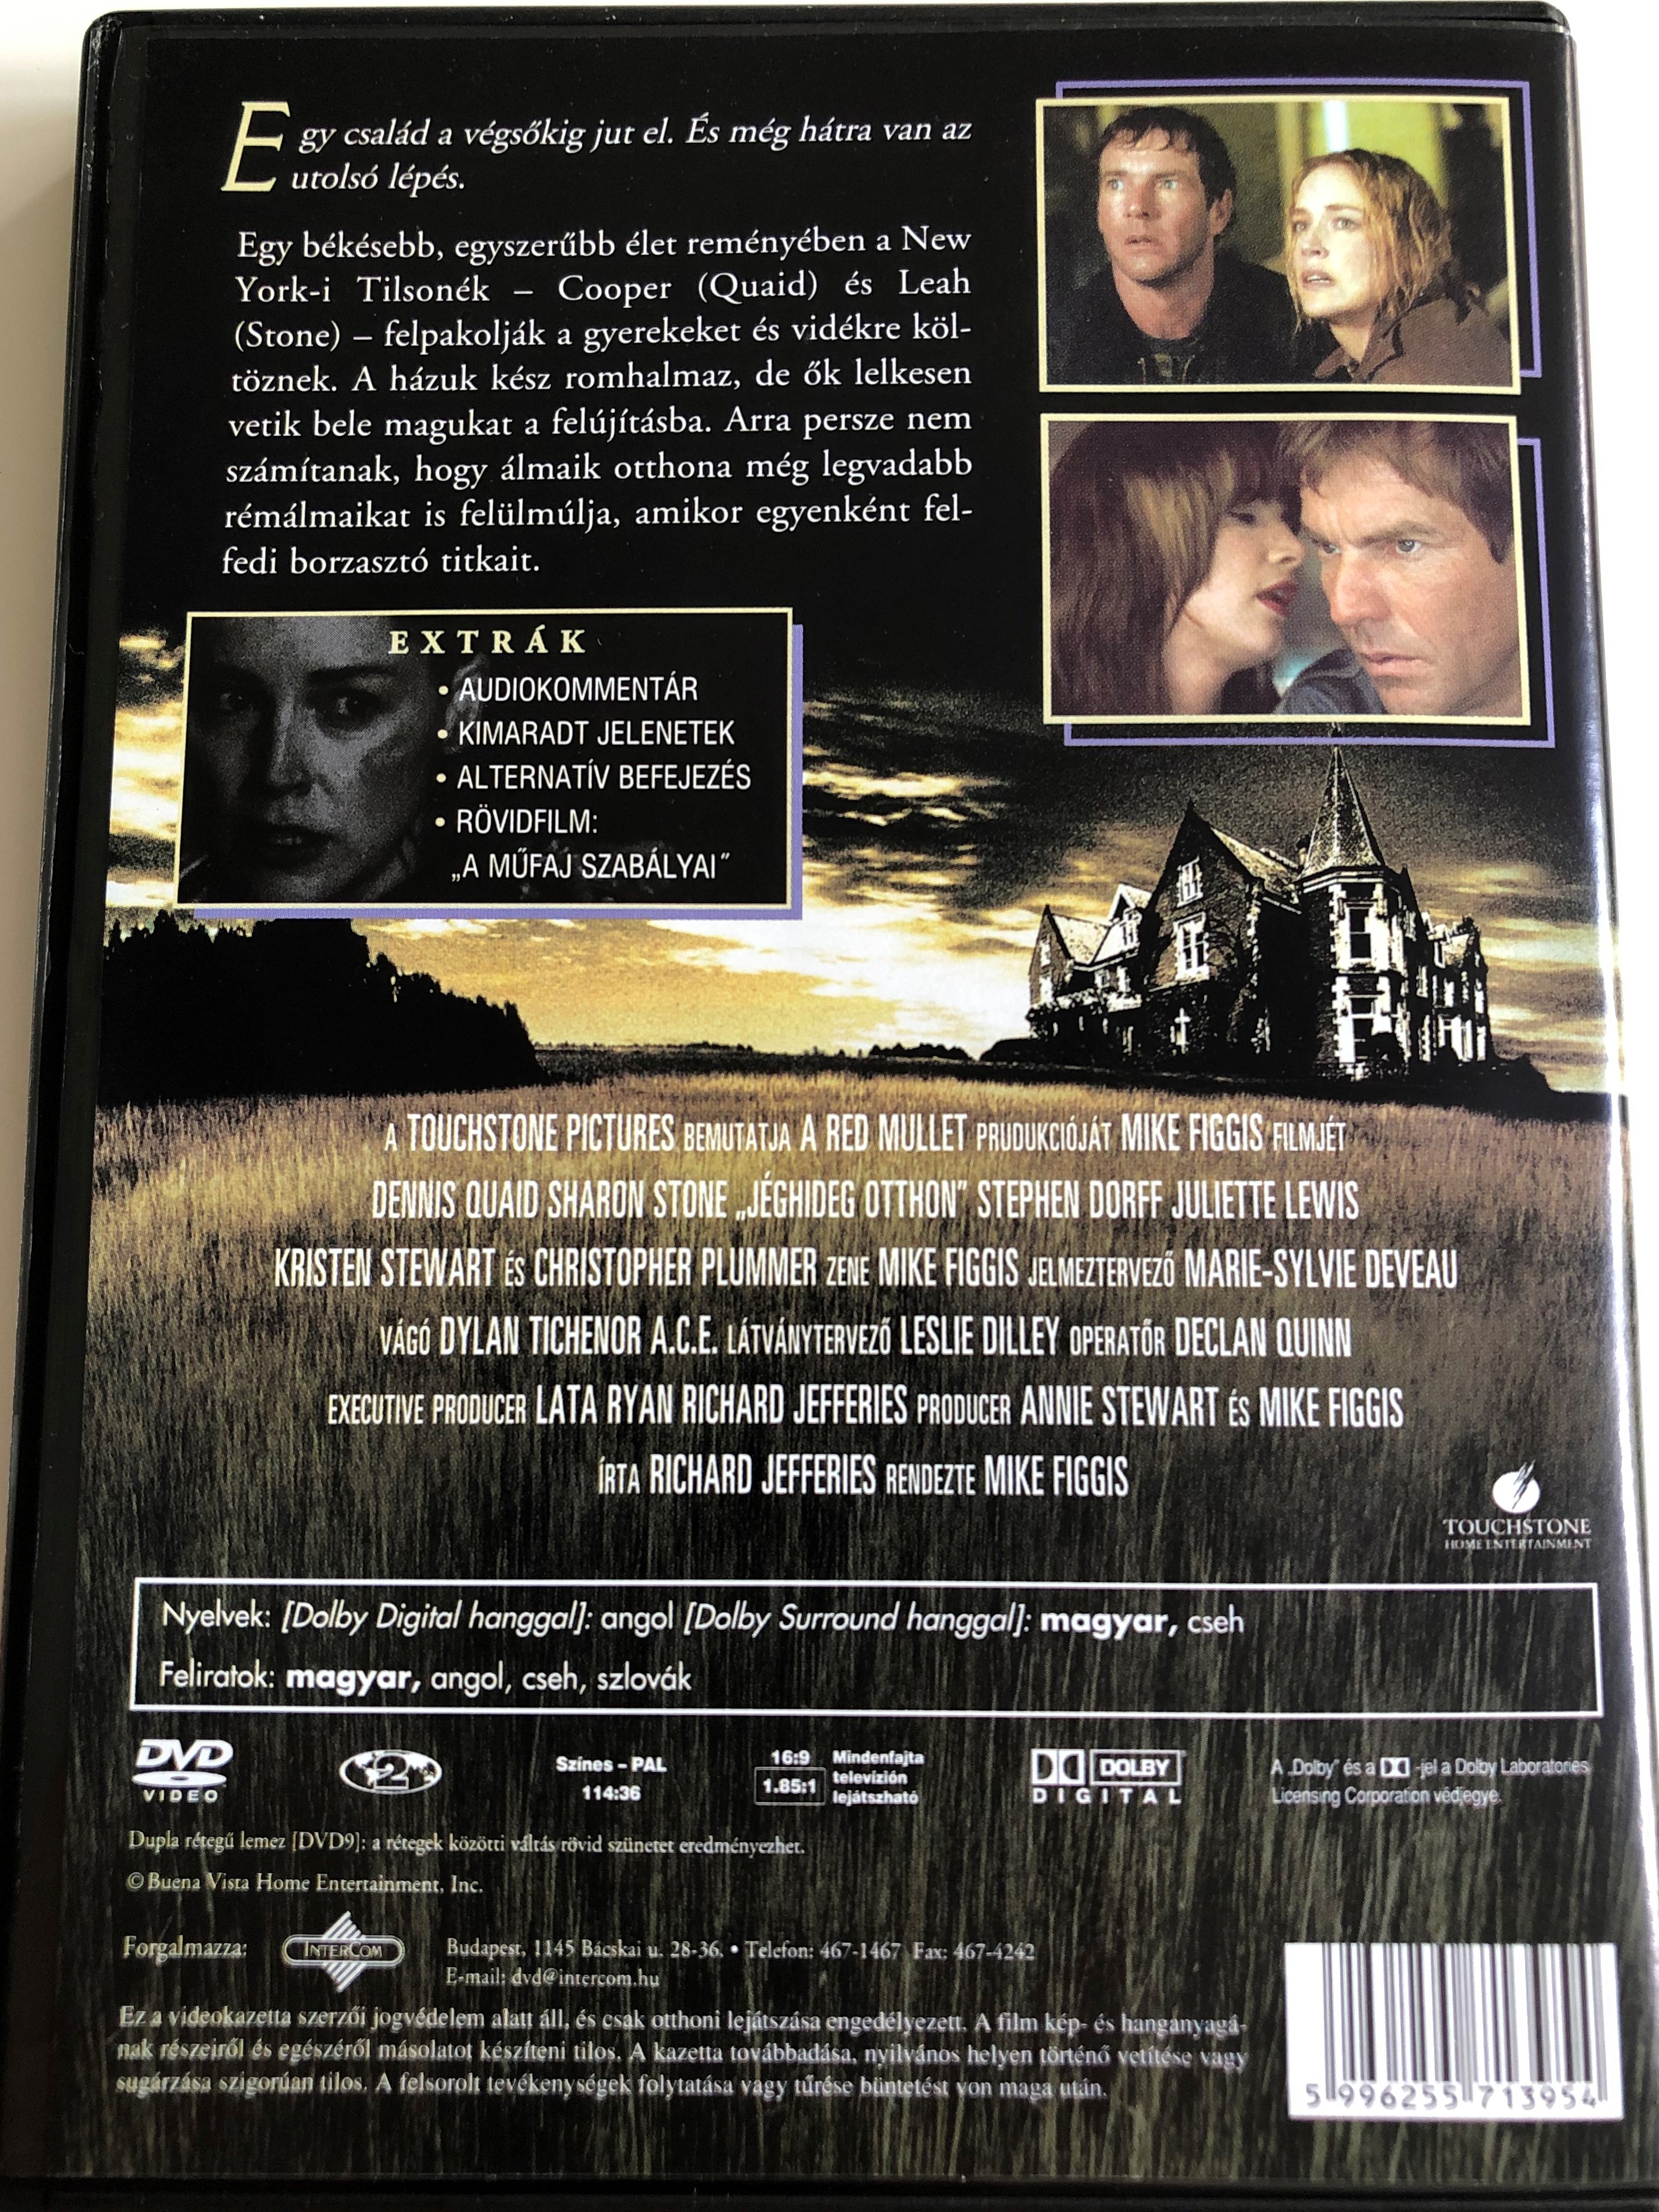 cold-creek-manor-dvd-2003-j-ghideg-otthon-directed-by-mike-figgis-starring-dennis-quaid-sharon-stone-stephen-dorff-juliette-lewis-2-.jpg